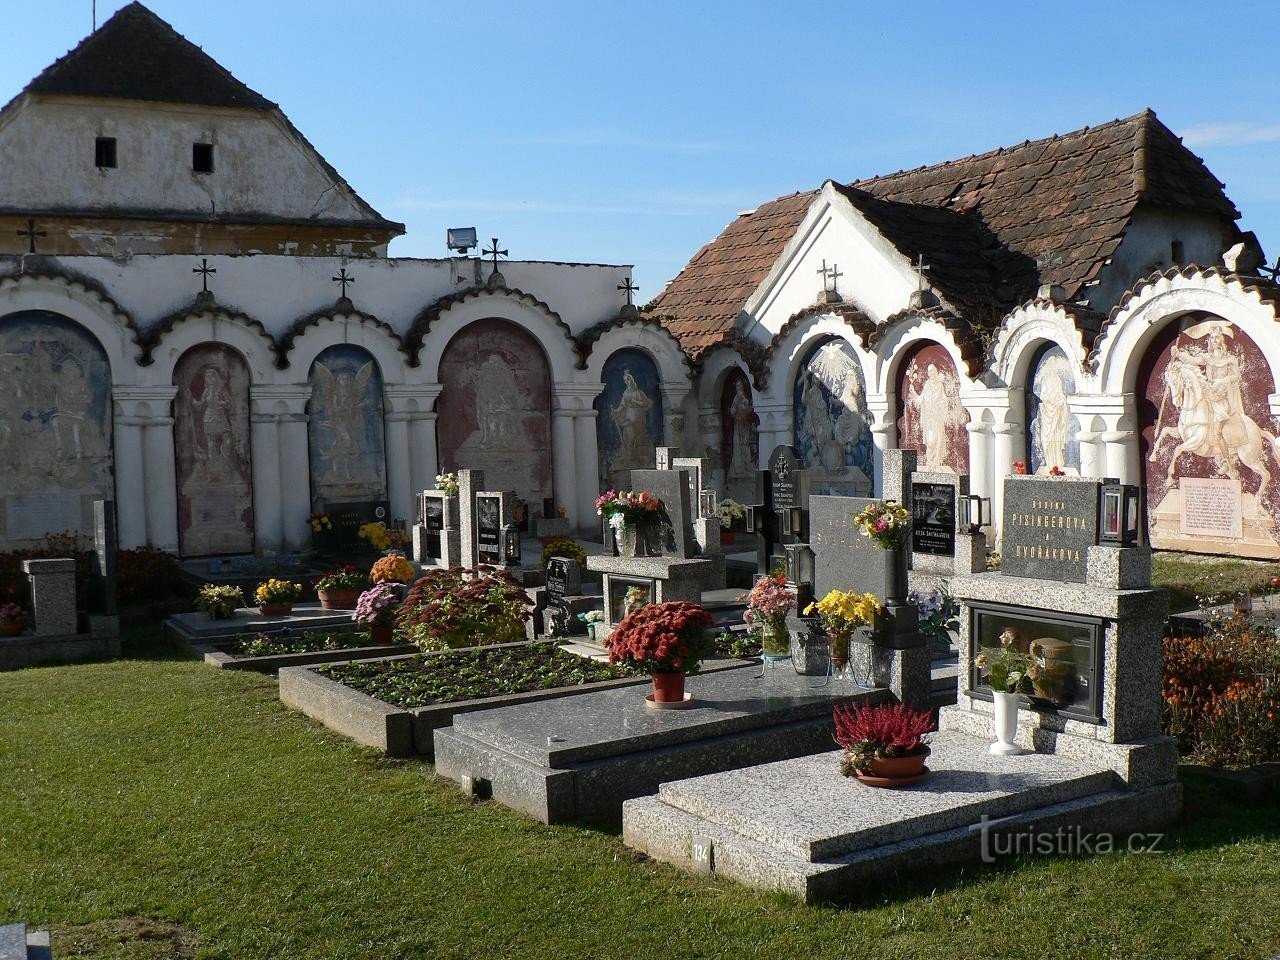 Albrechtice nad Vltavou, a temető sarka